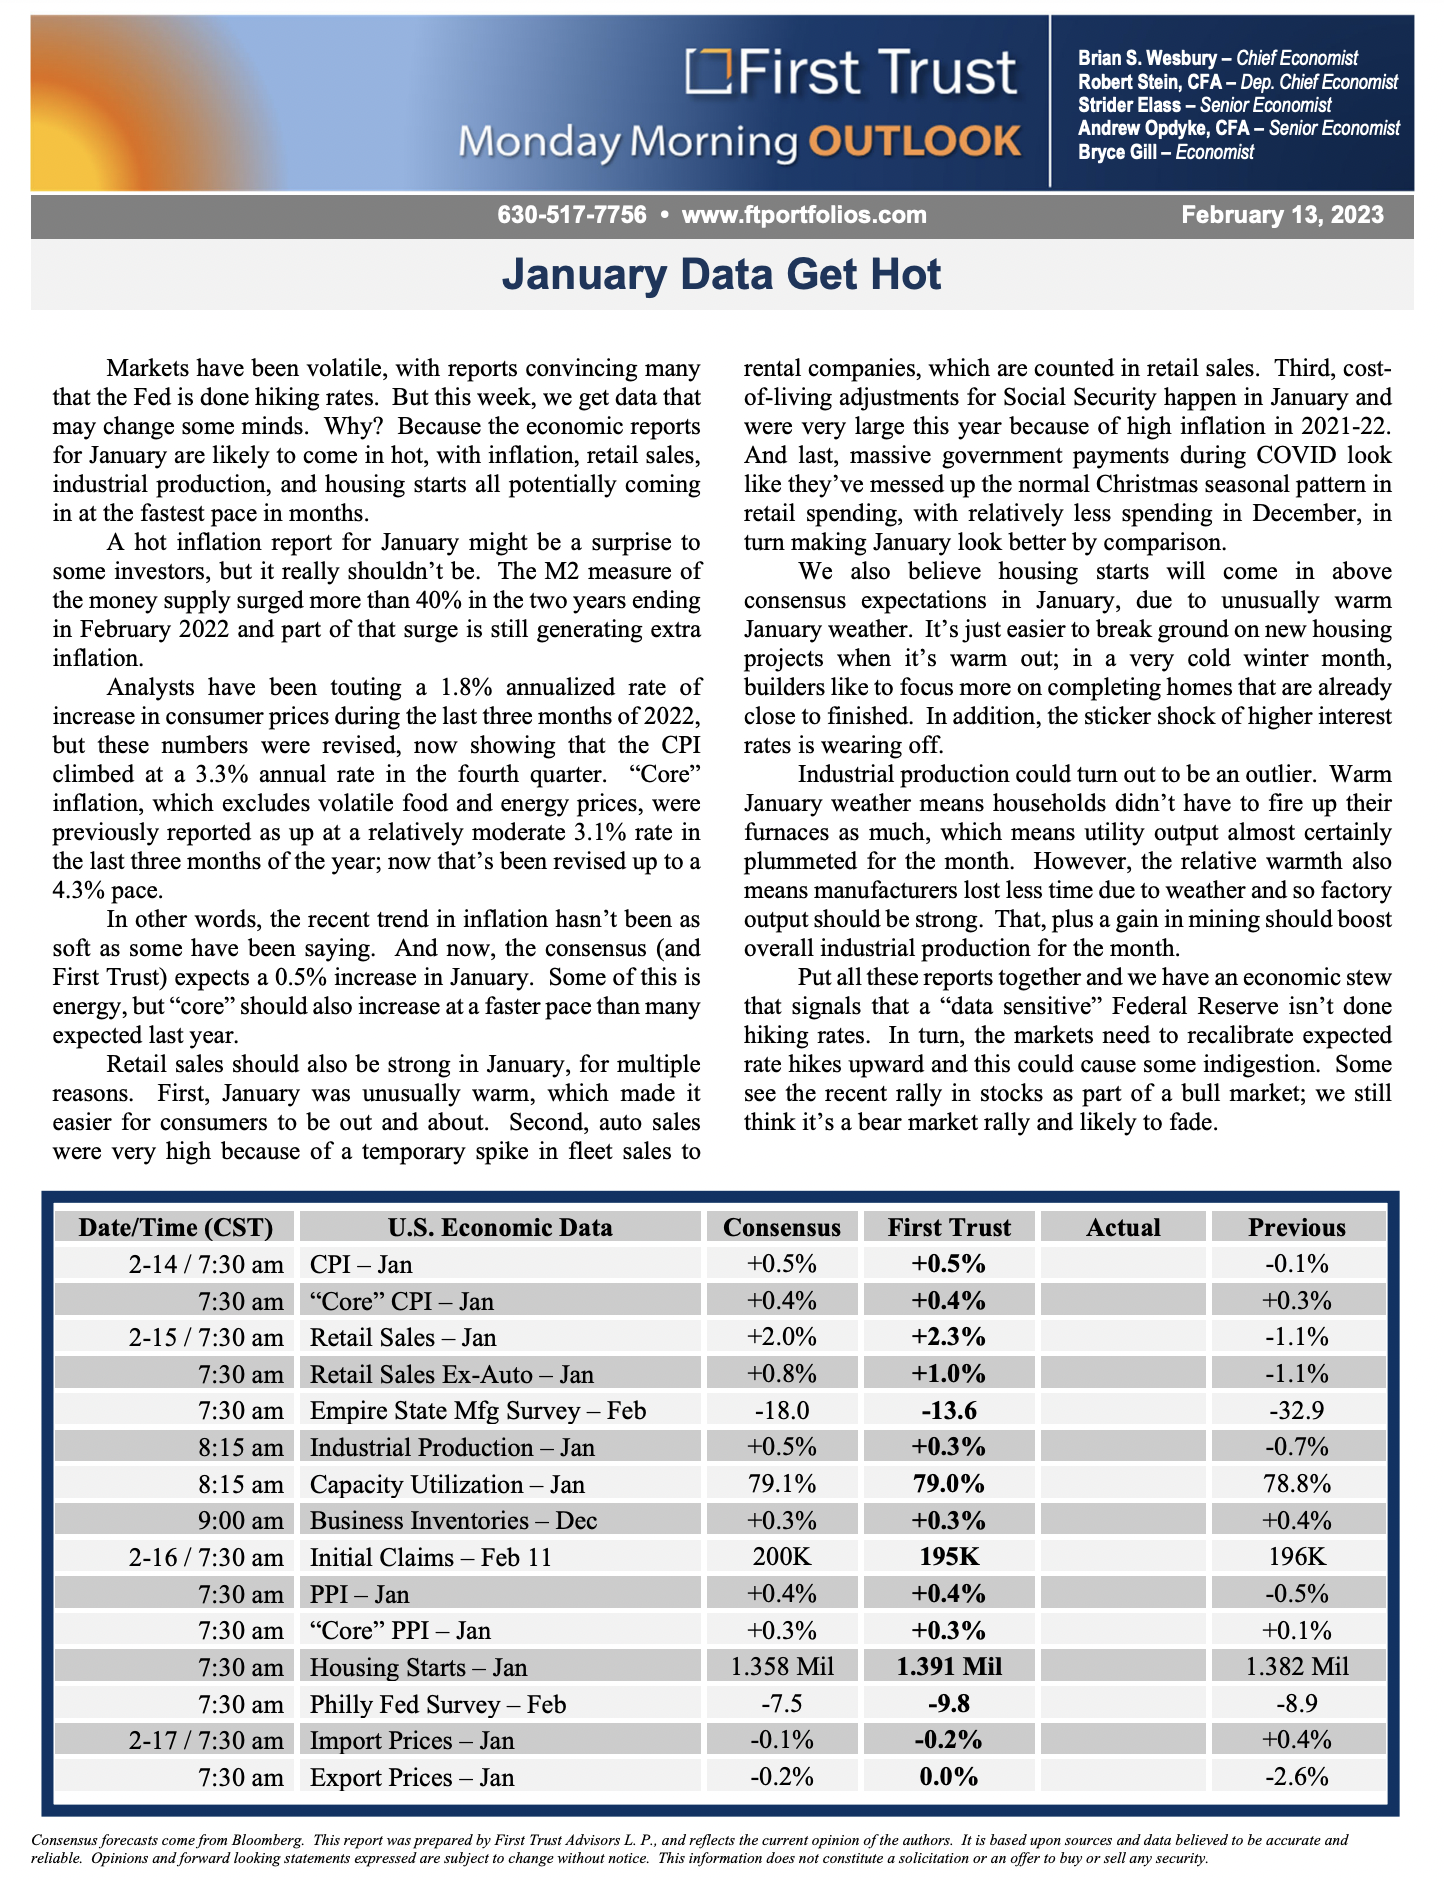 Monday Morning Outlook | January Data Get Hot | Sutley Wertzer